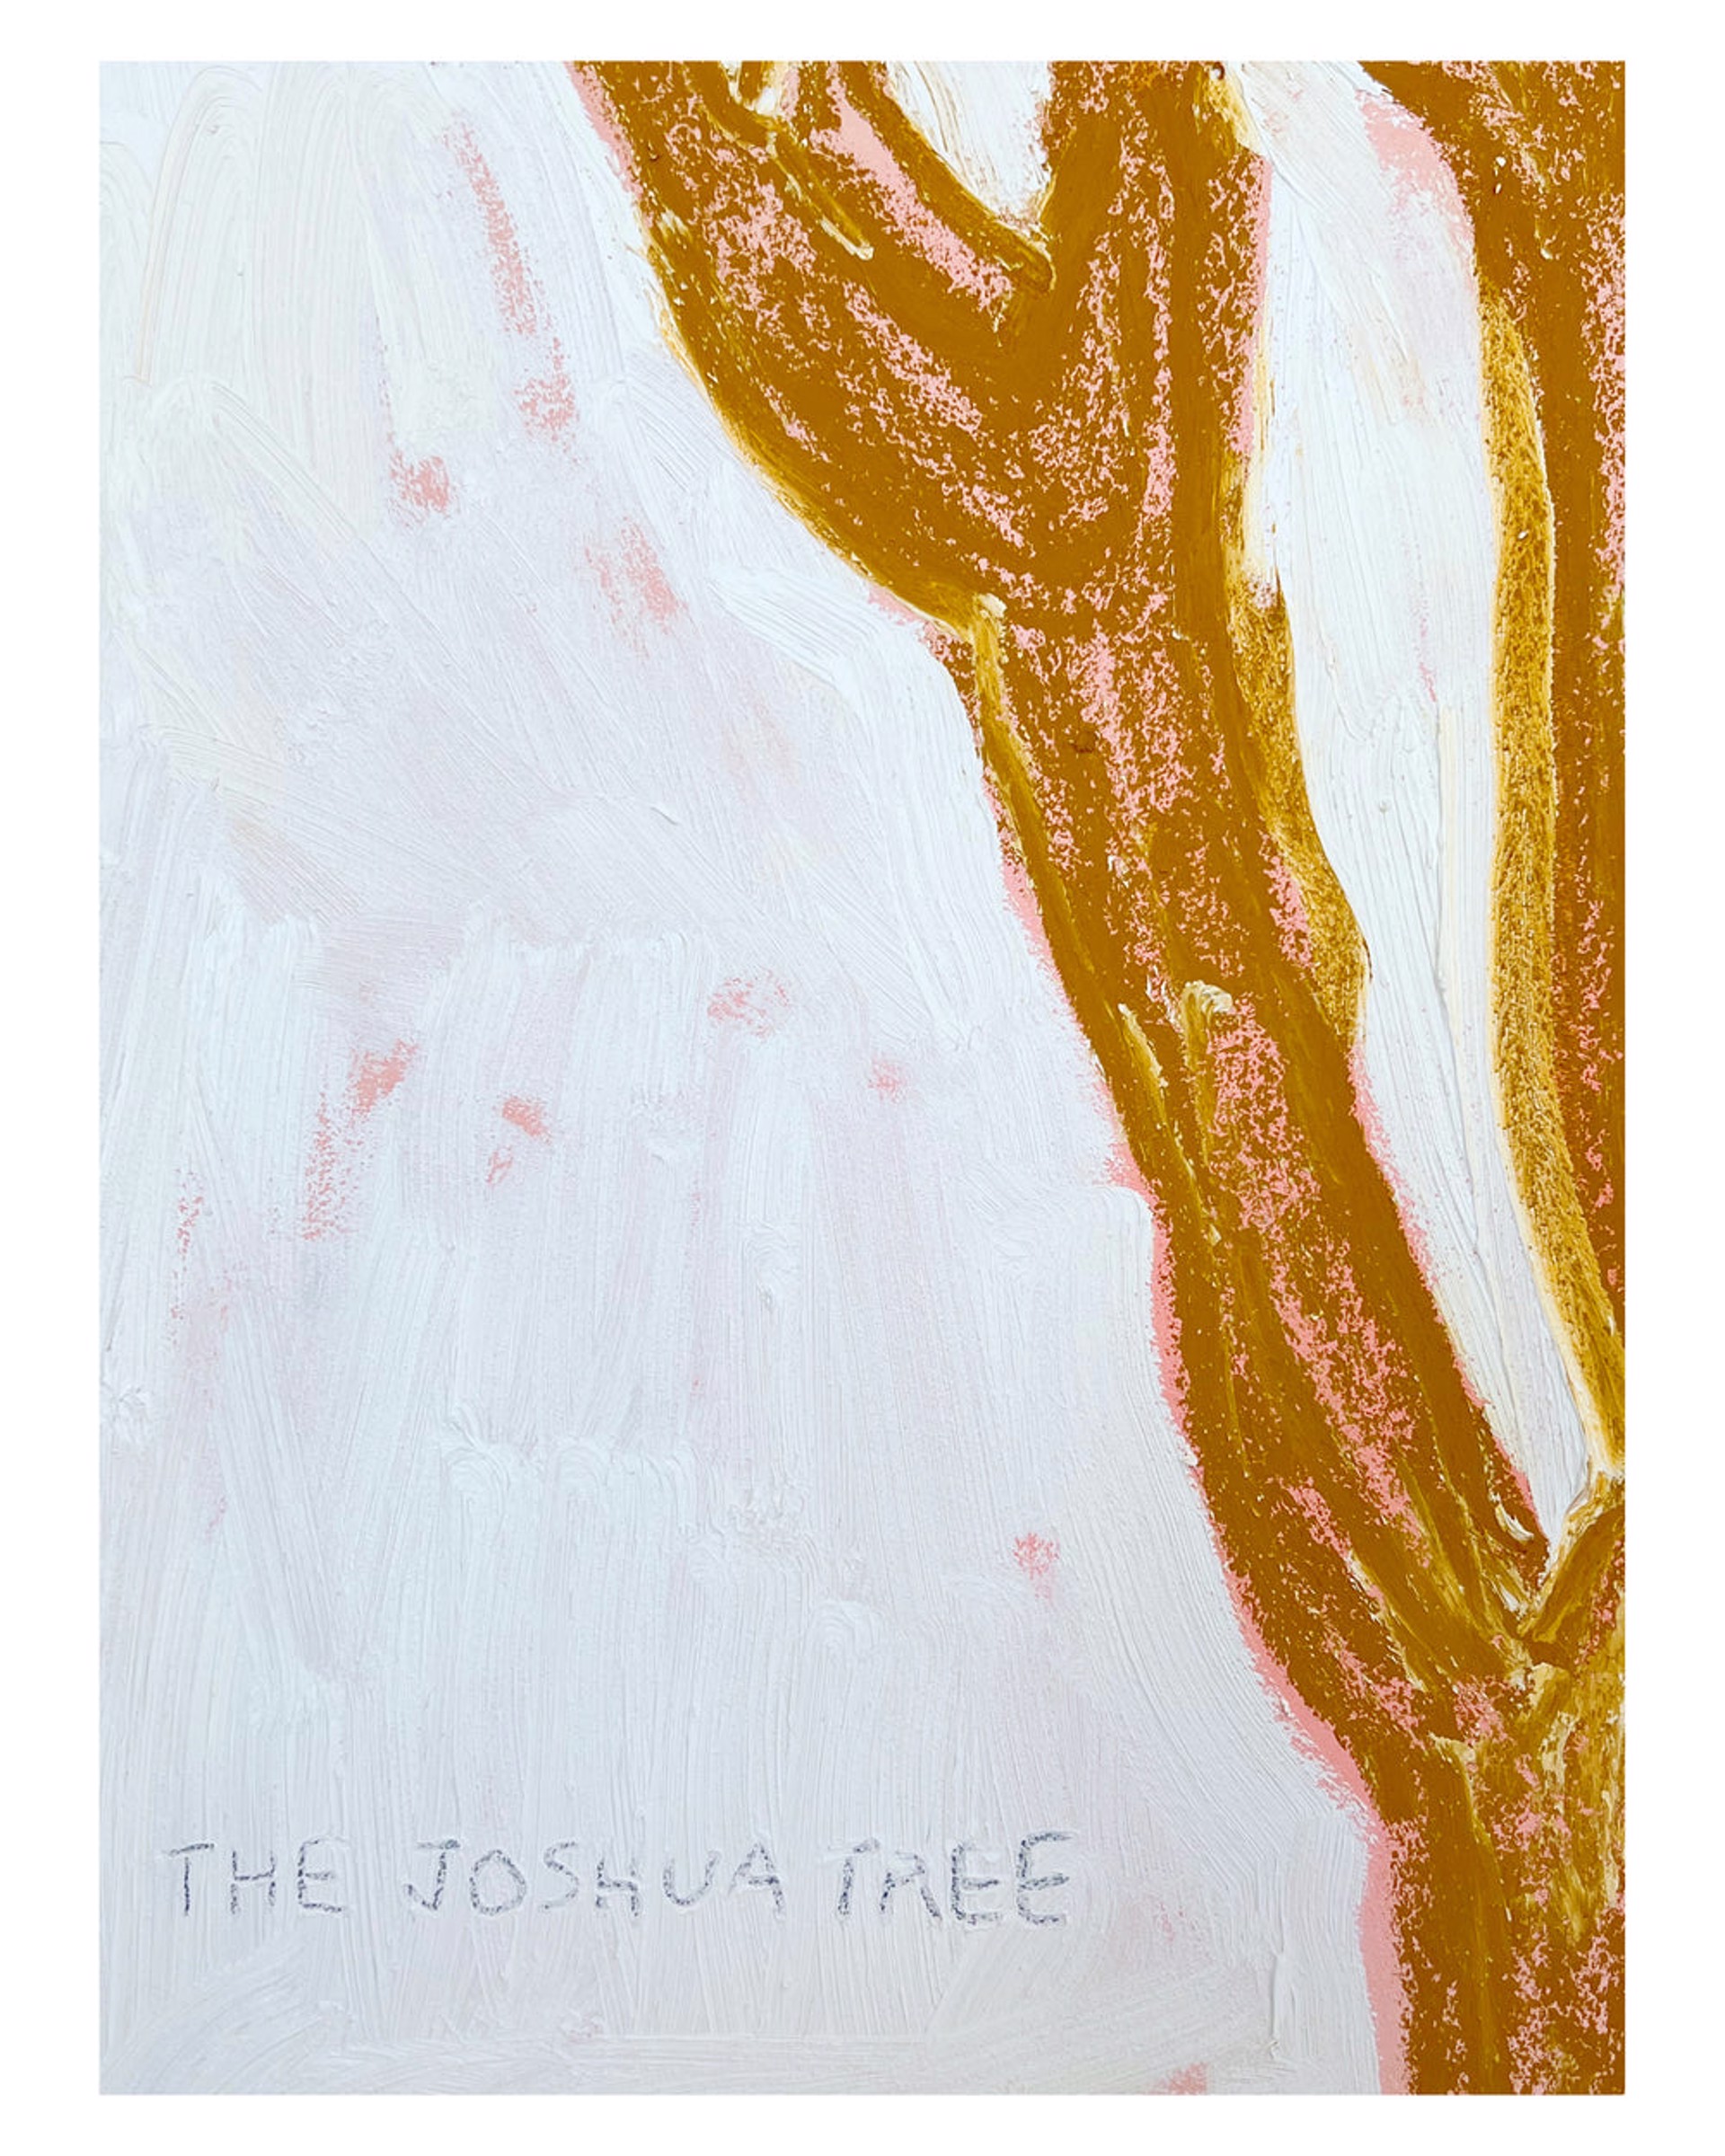 The Joshua Tree, No. 2 by Anne-Louise Ewen